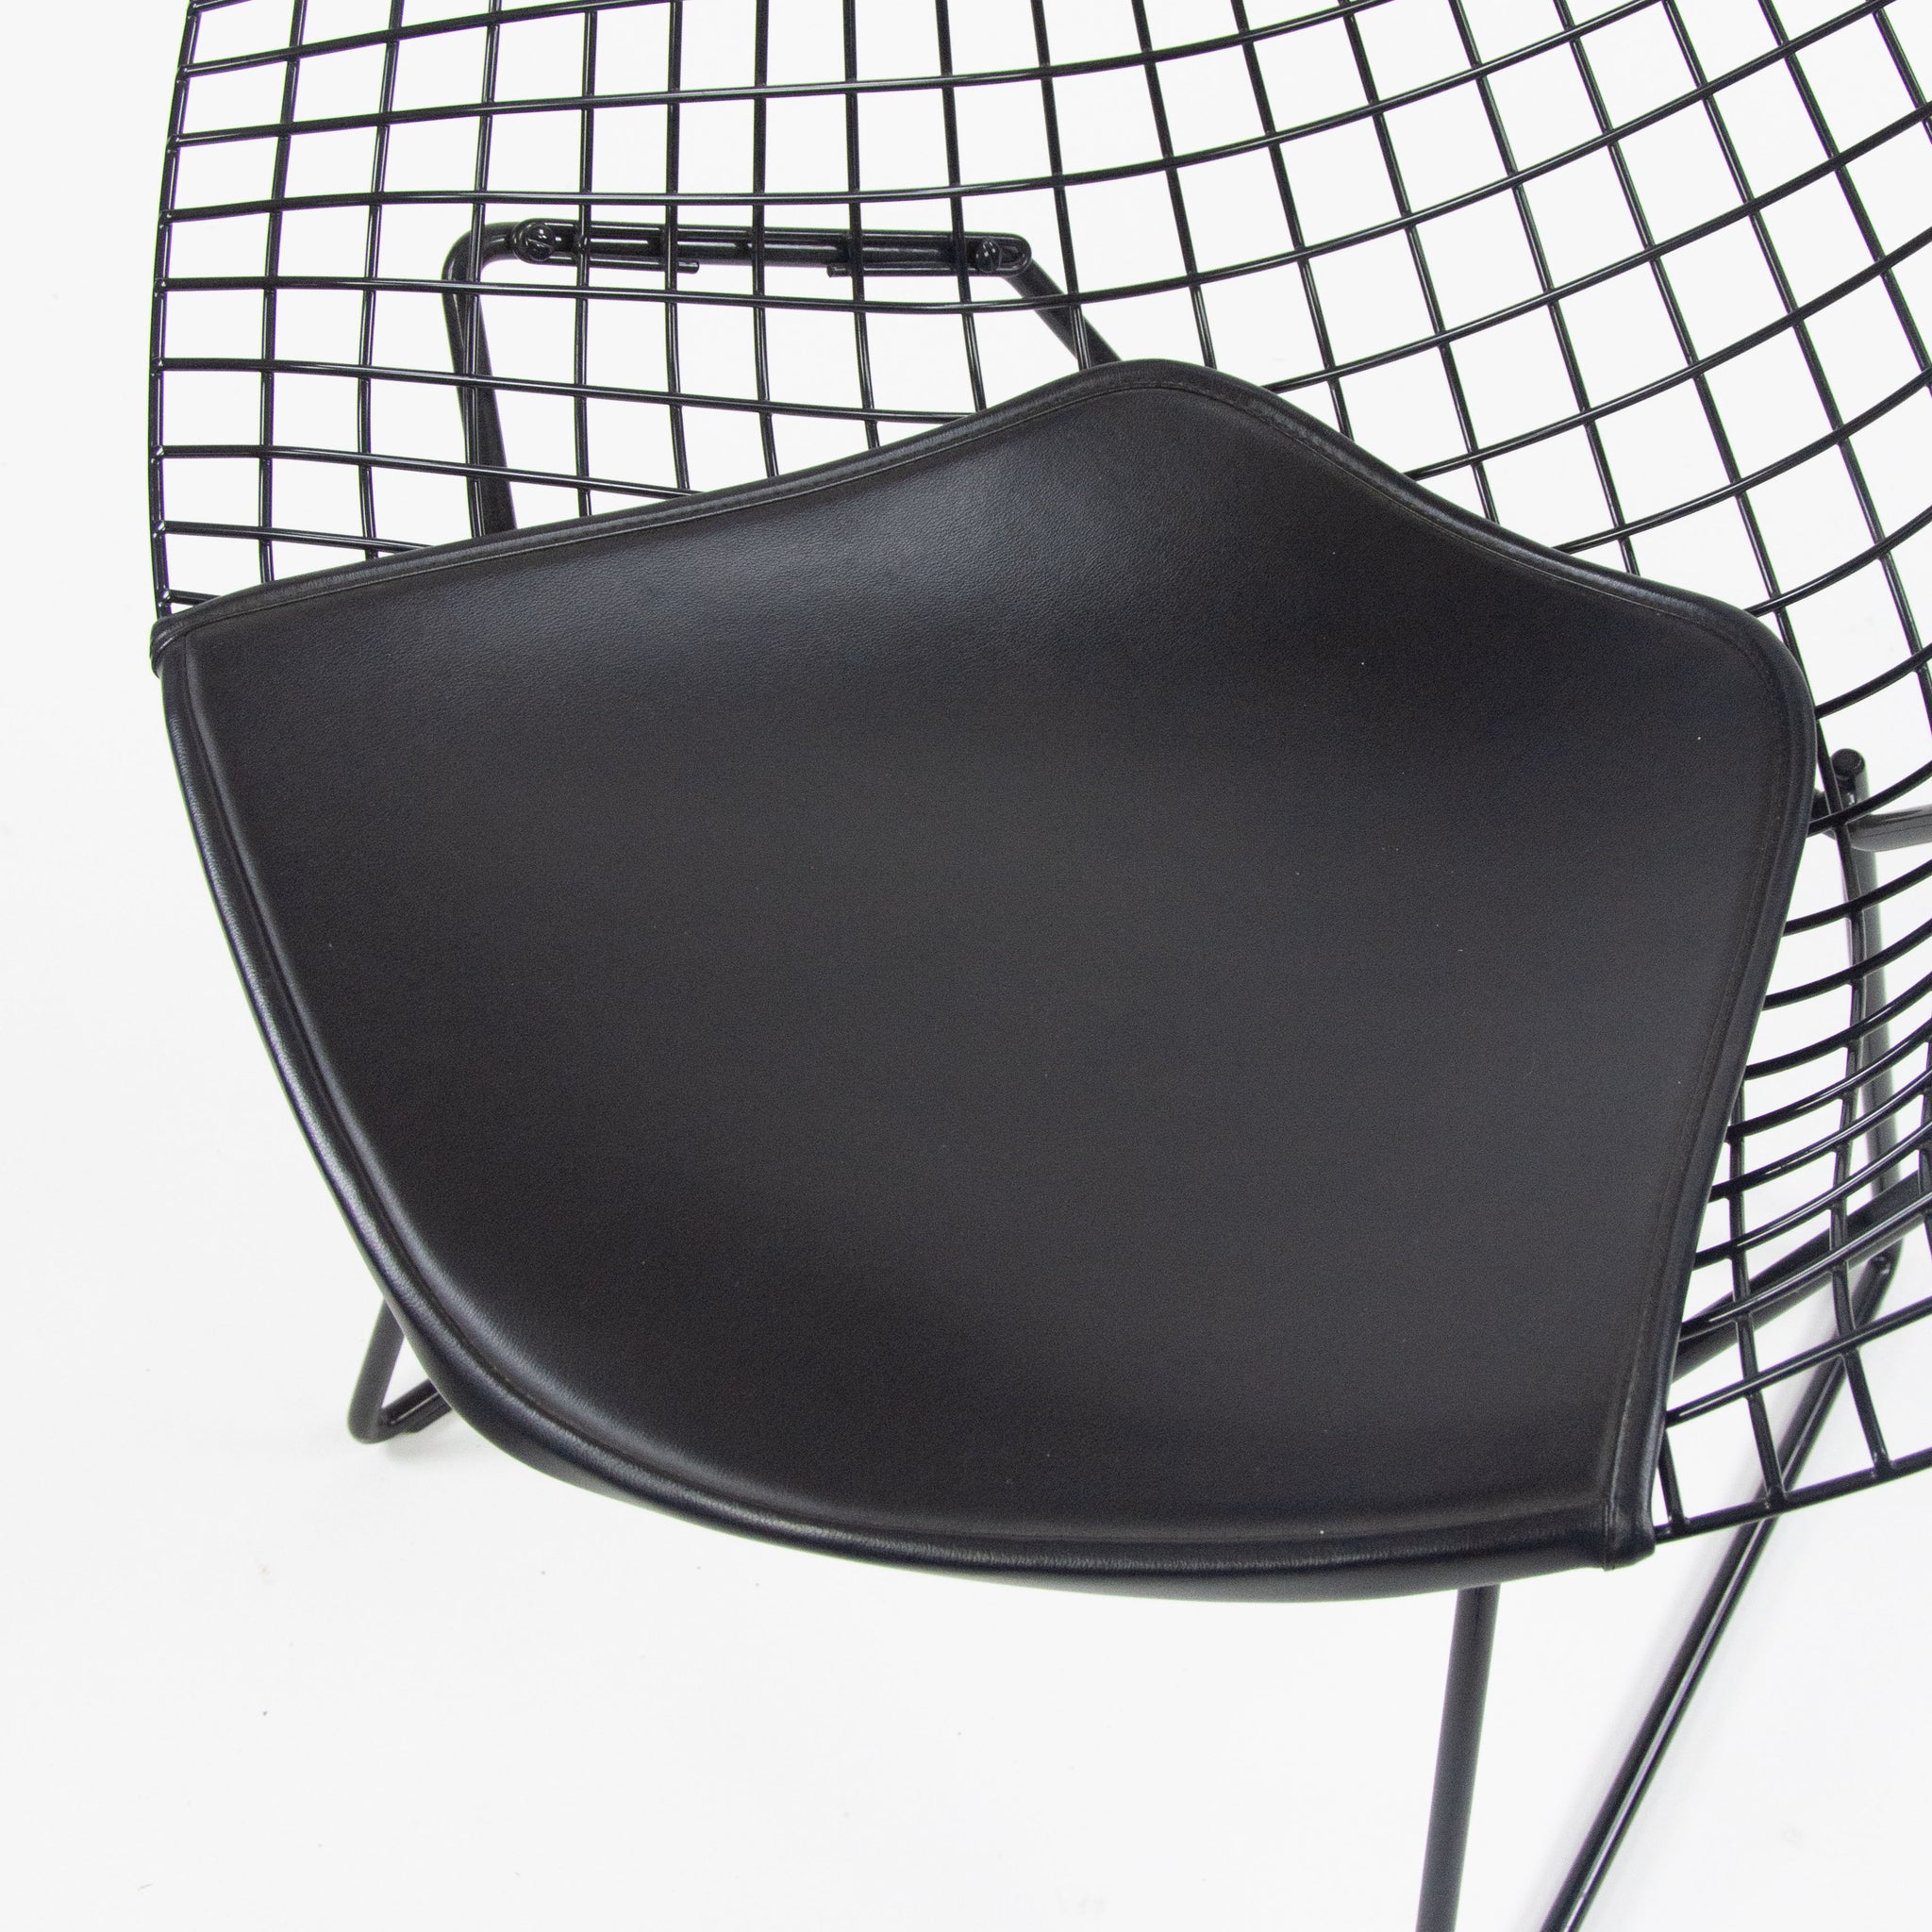 SOLD Knoll International Harry Bertoia Wire Diamond Chairs Black Pair MINT